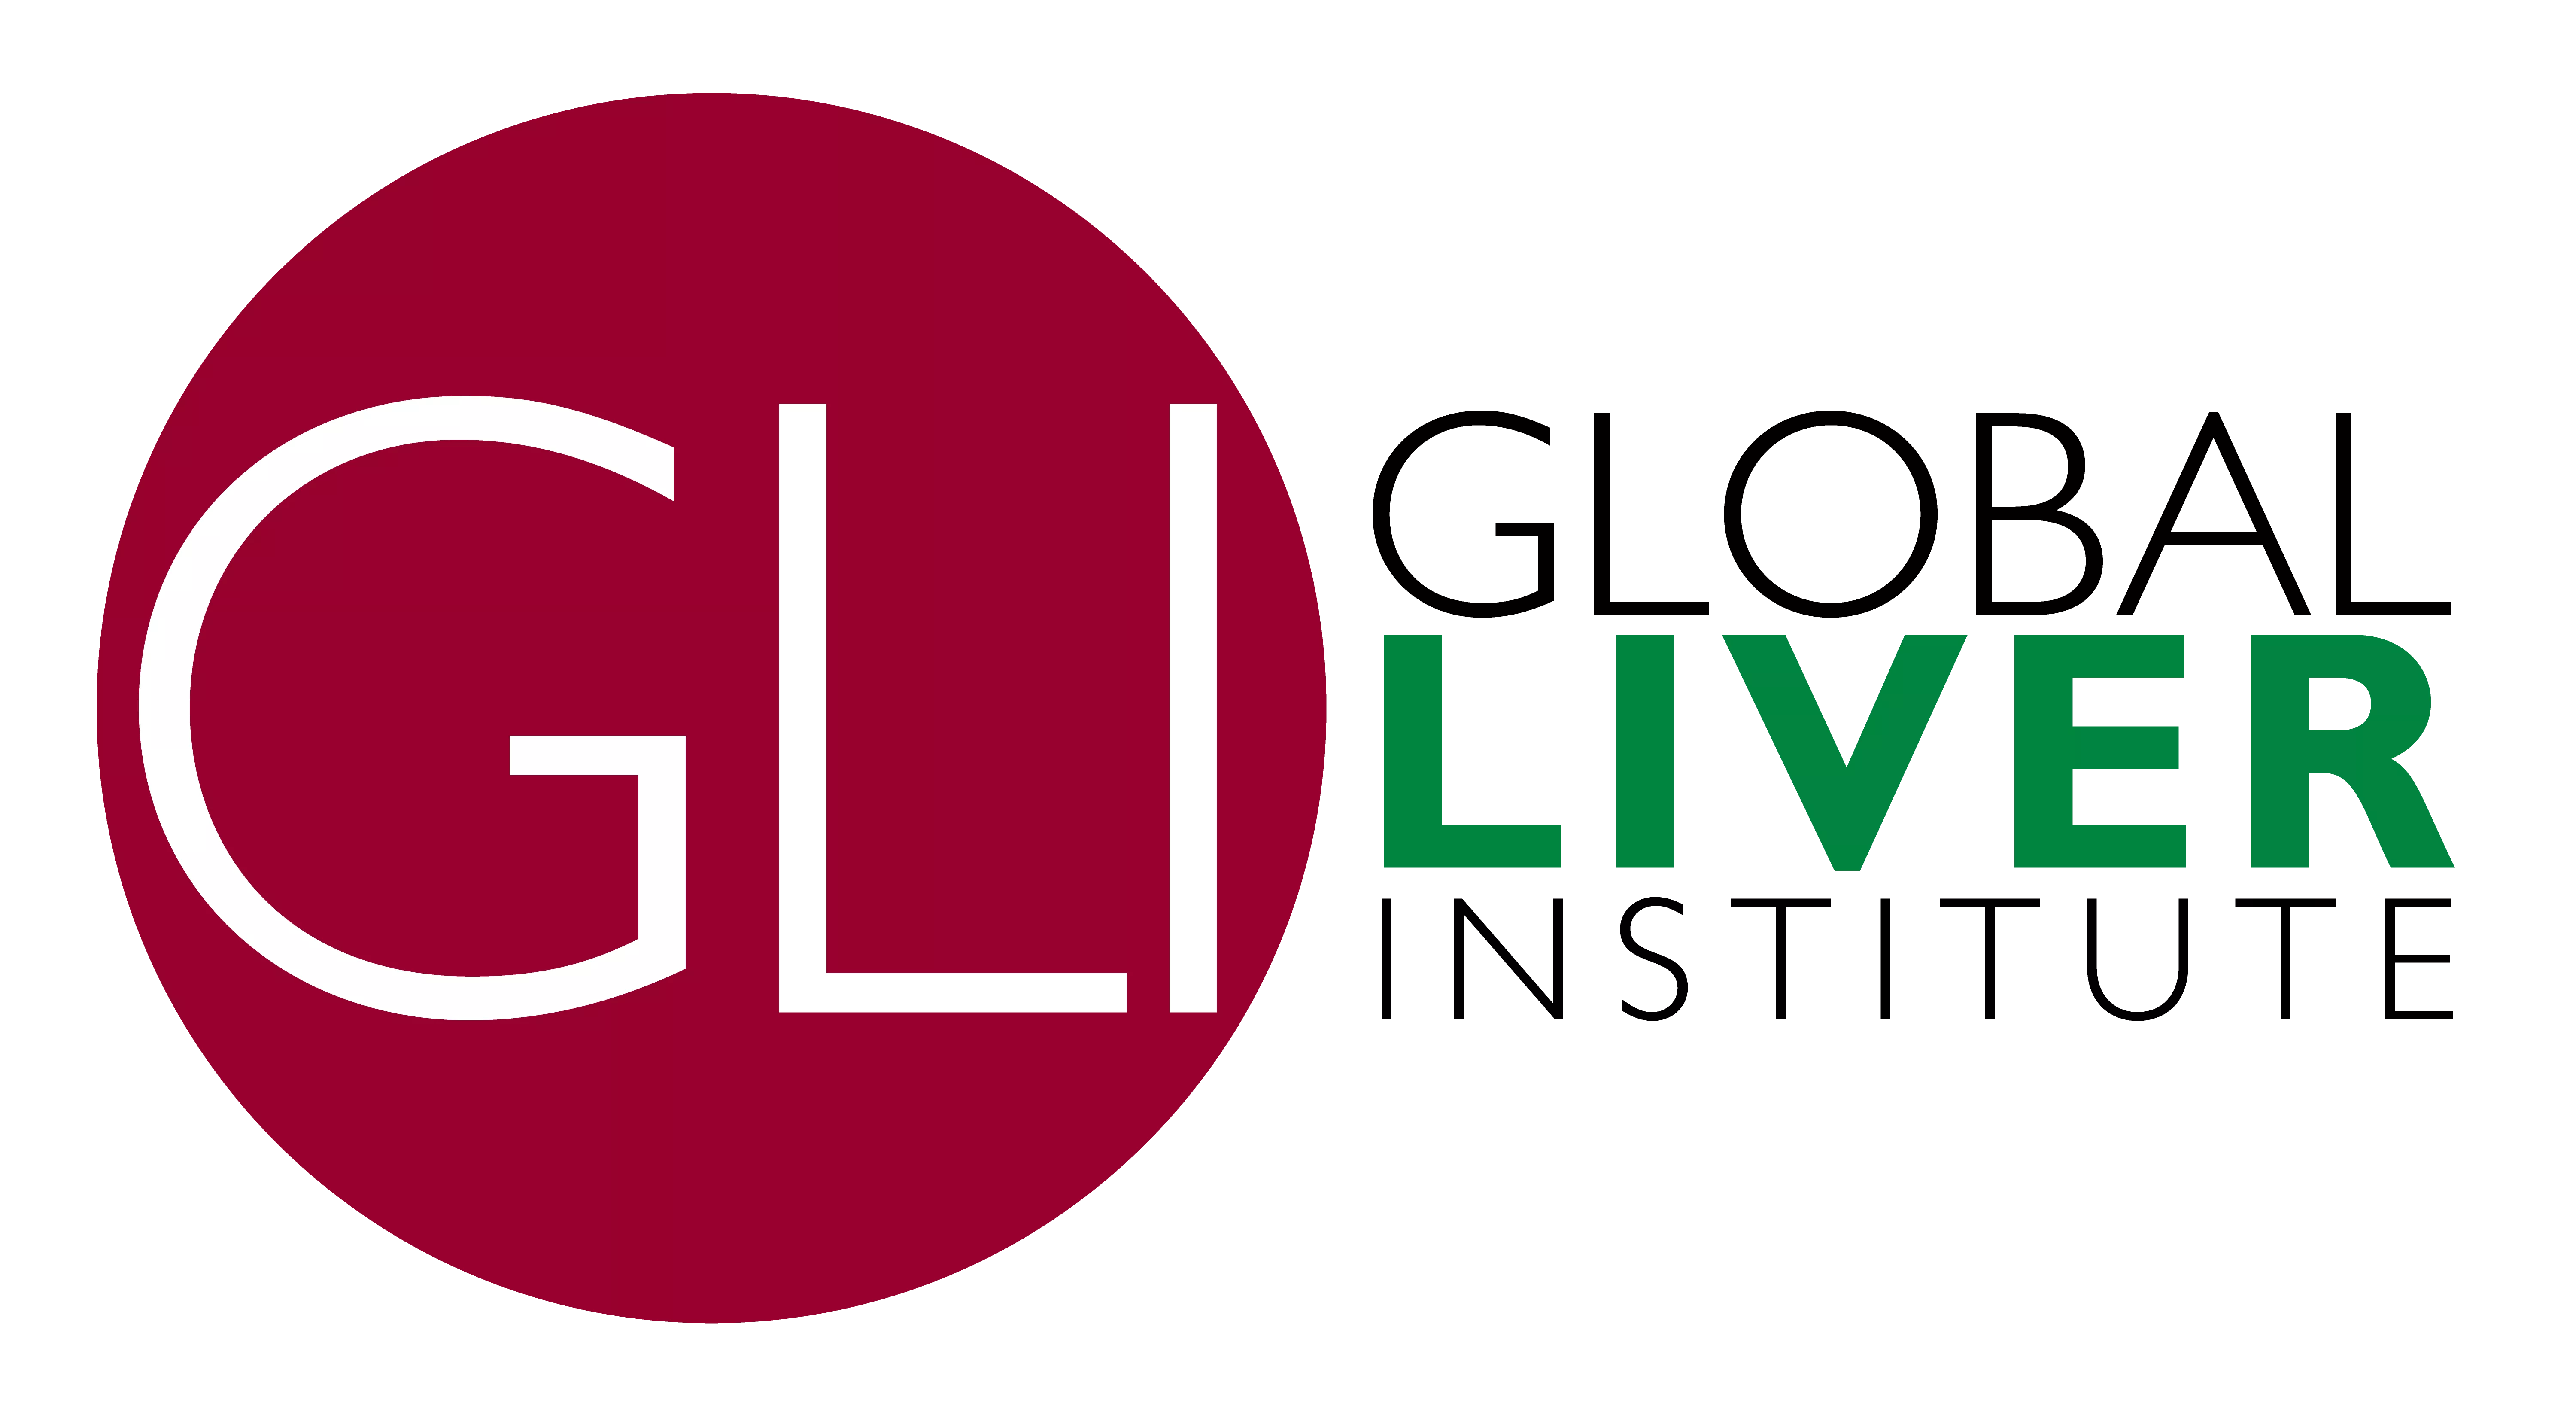 Global Liver Institute logo